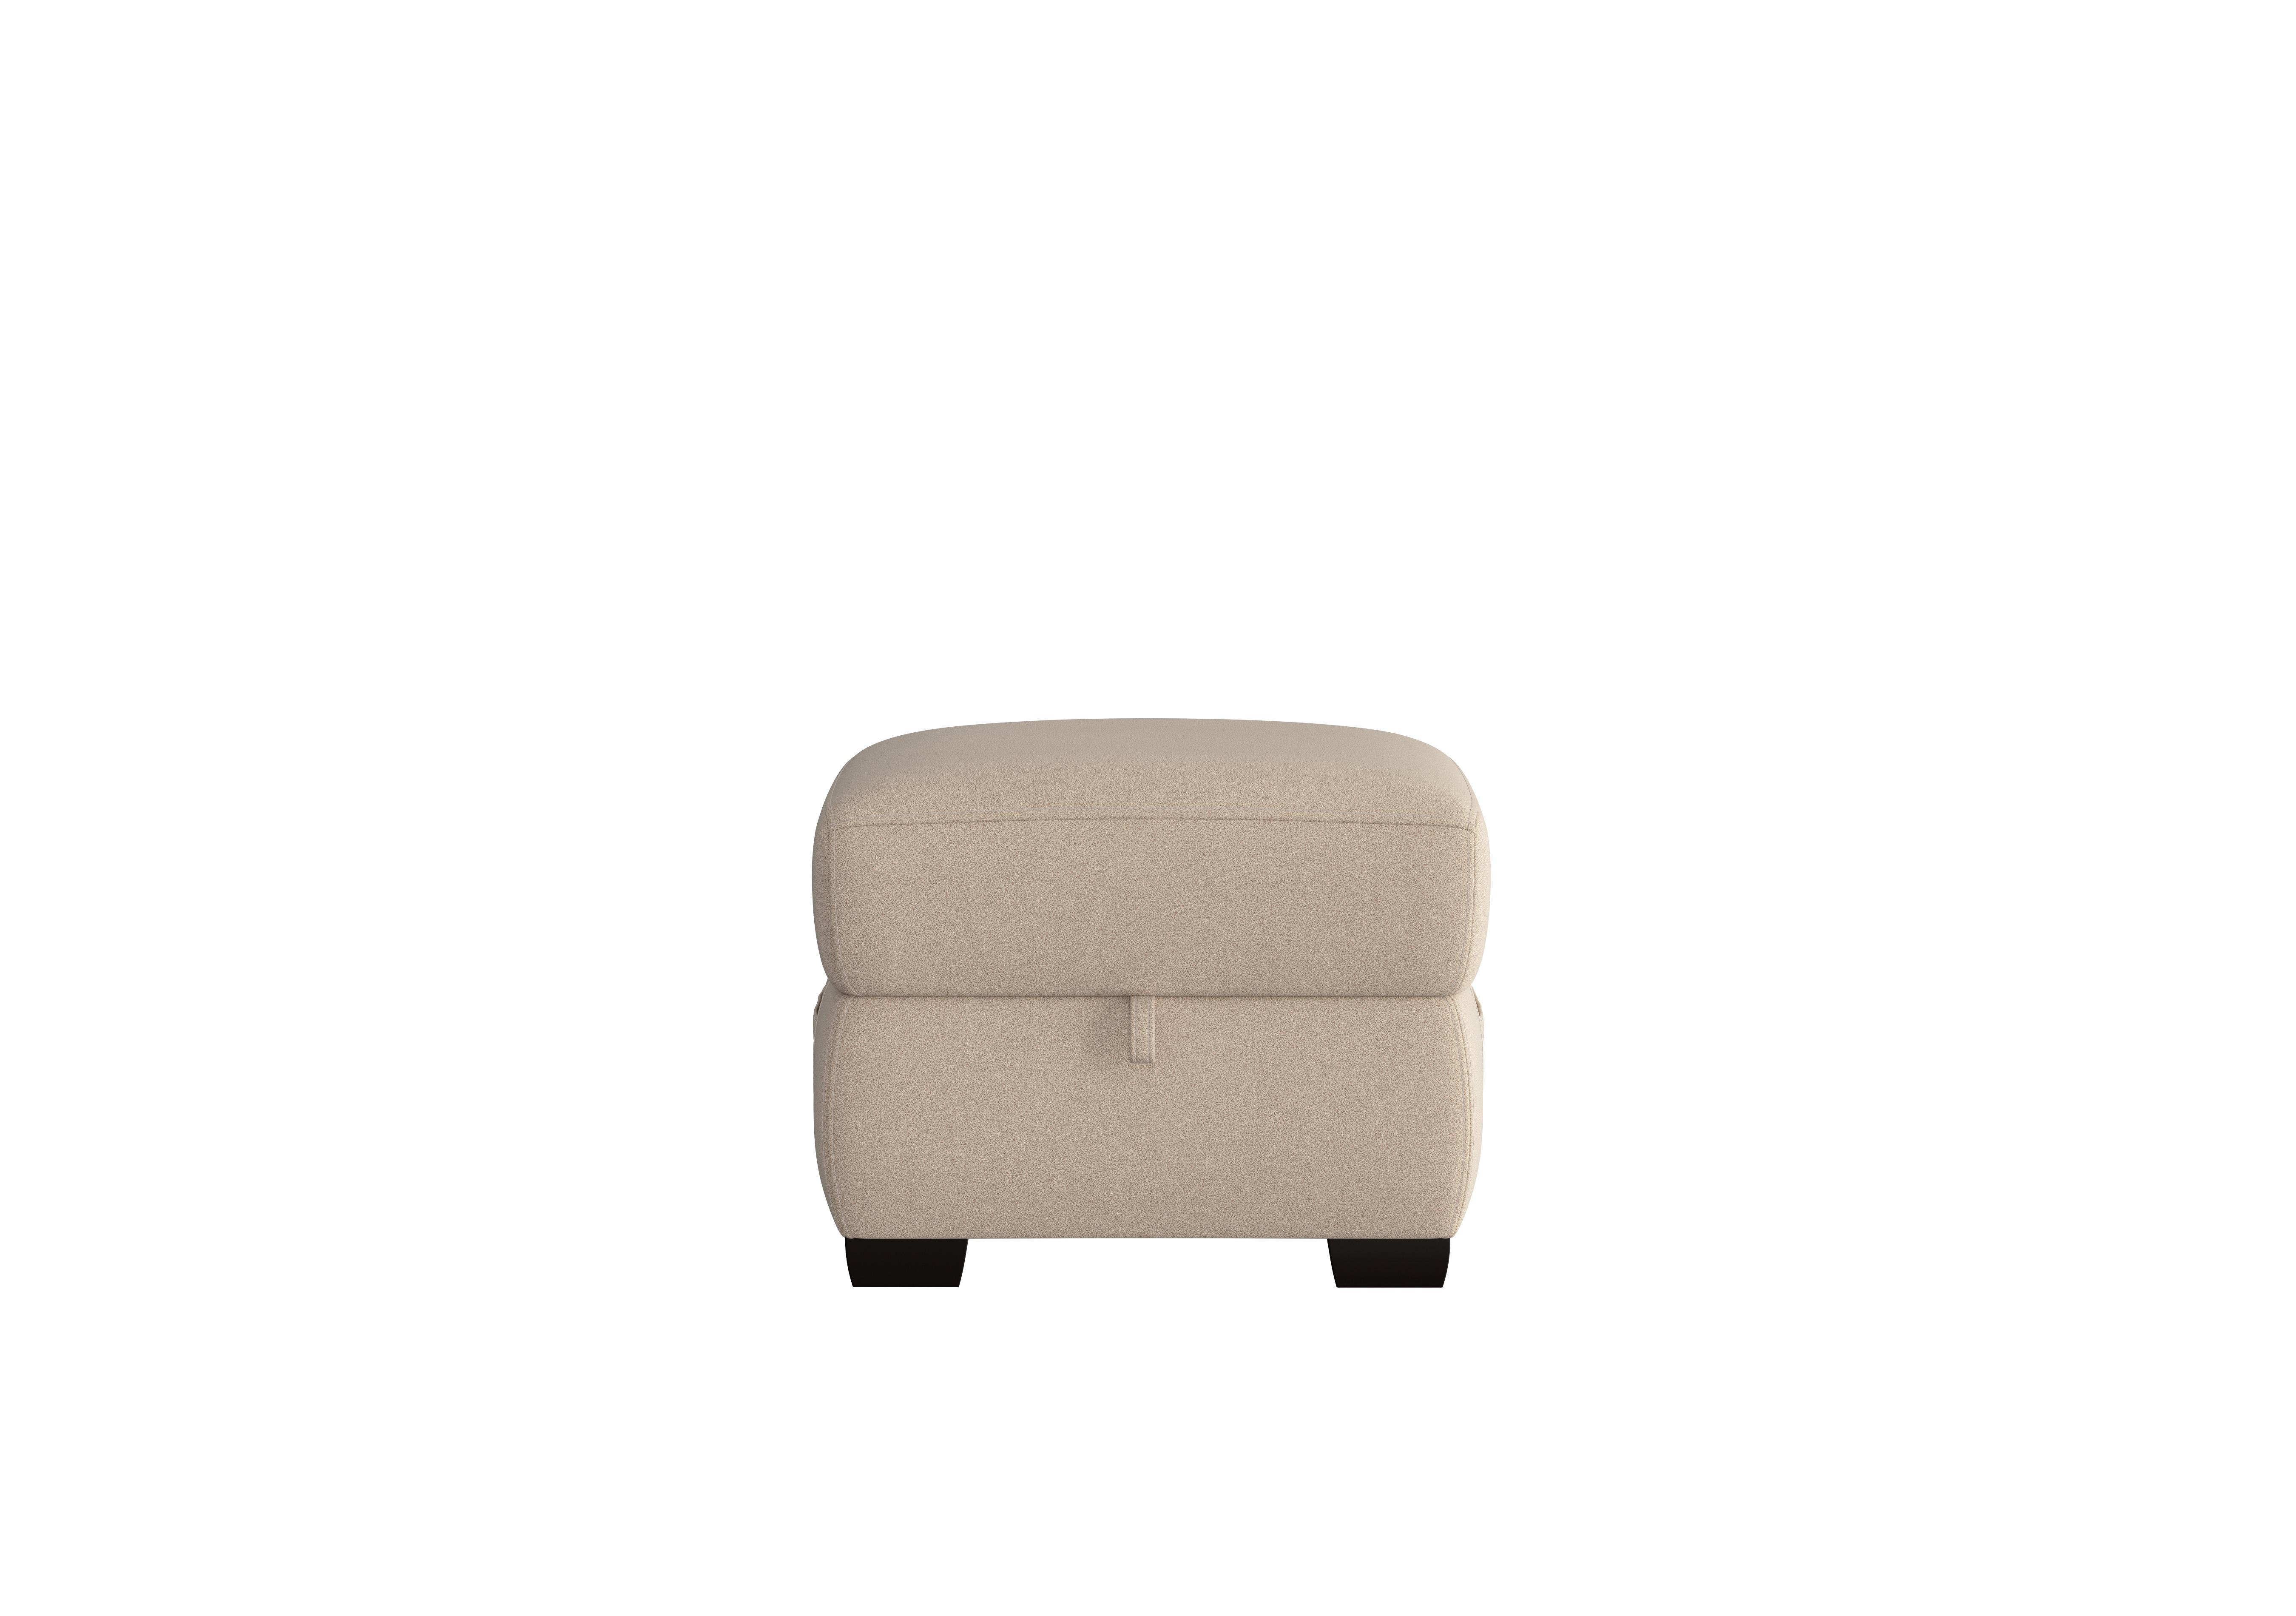 Starlight Express Fabric Storage Footstool in Bfa-Blj-R20 Bisque on Furniture Village